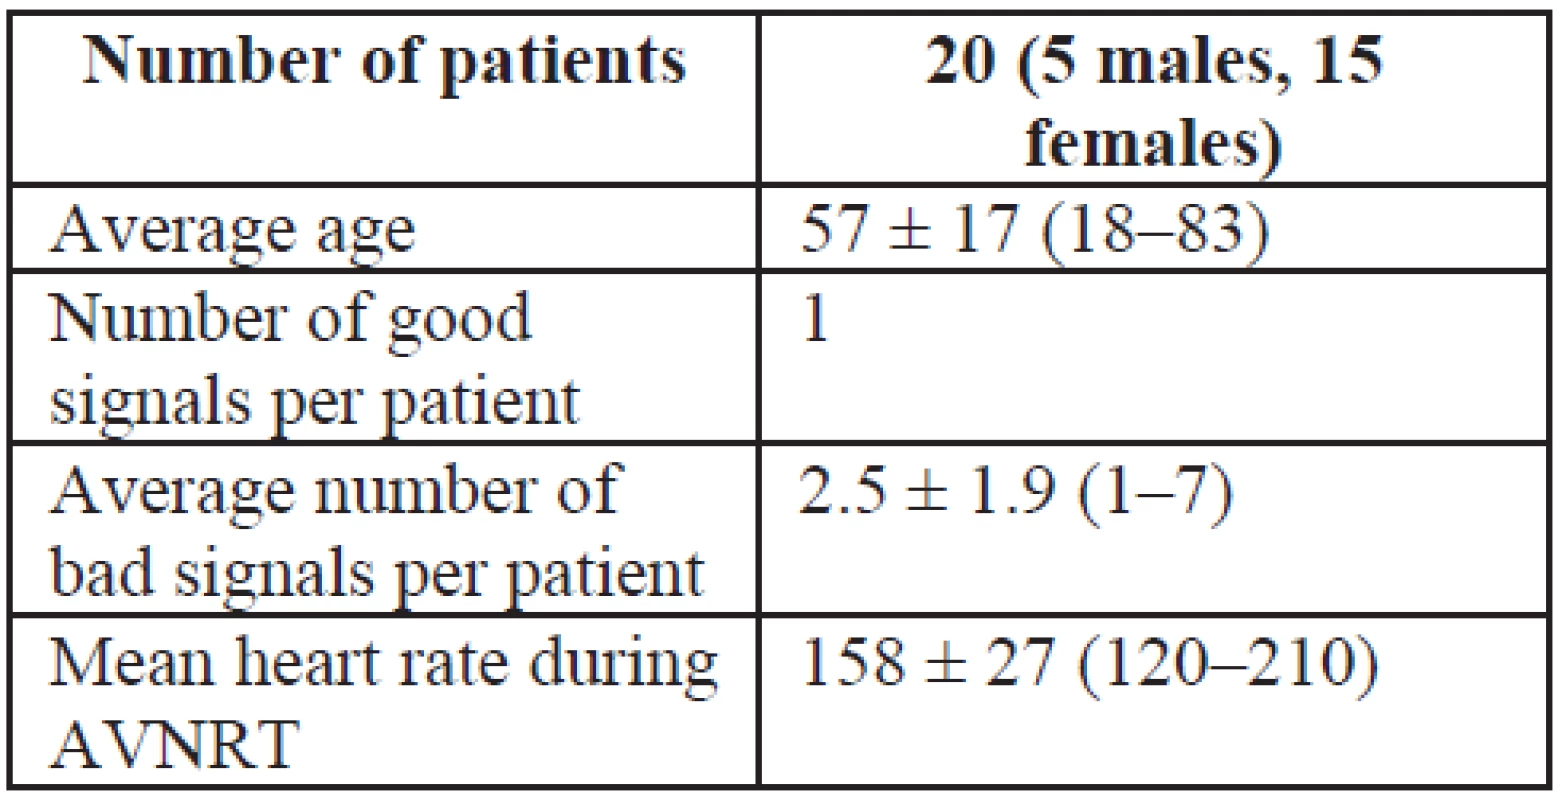 Baseline information about patients